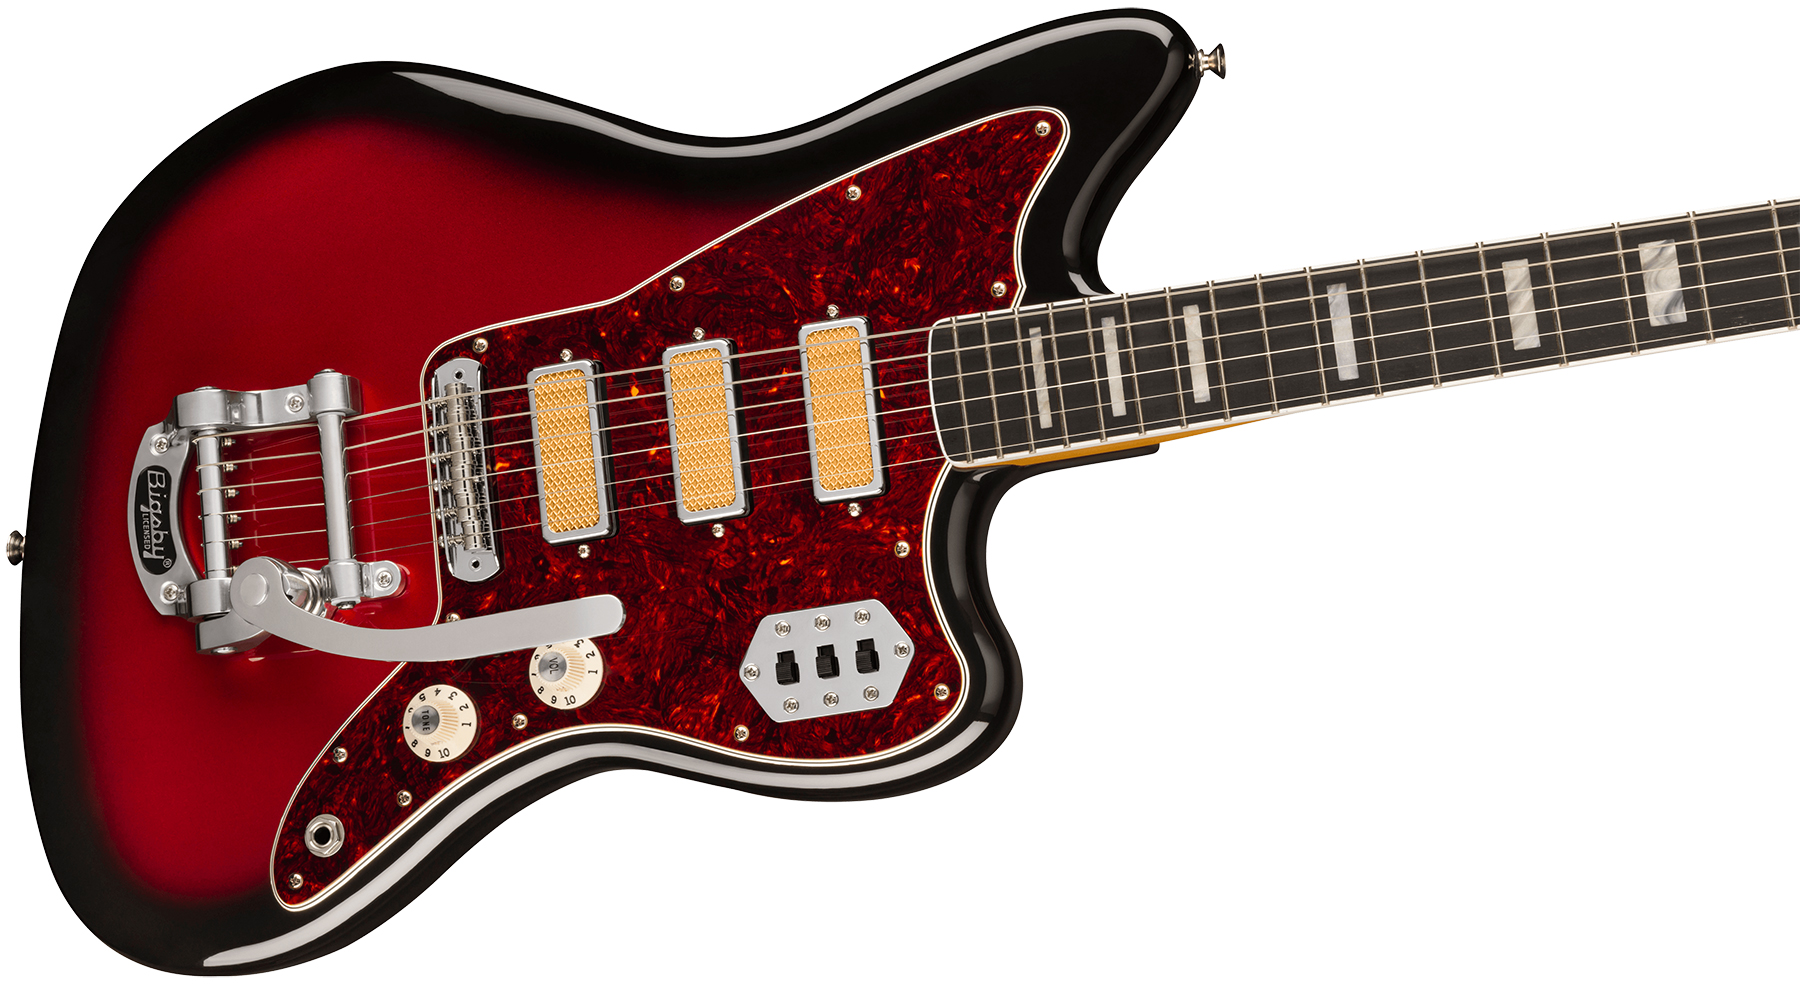 Fender Jazzmaster Gold Foil Ltd Mex 3mh Trem Bigsby Eb - Candy Apple Burst - Retro rock electric guitar - Variation 2